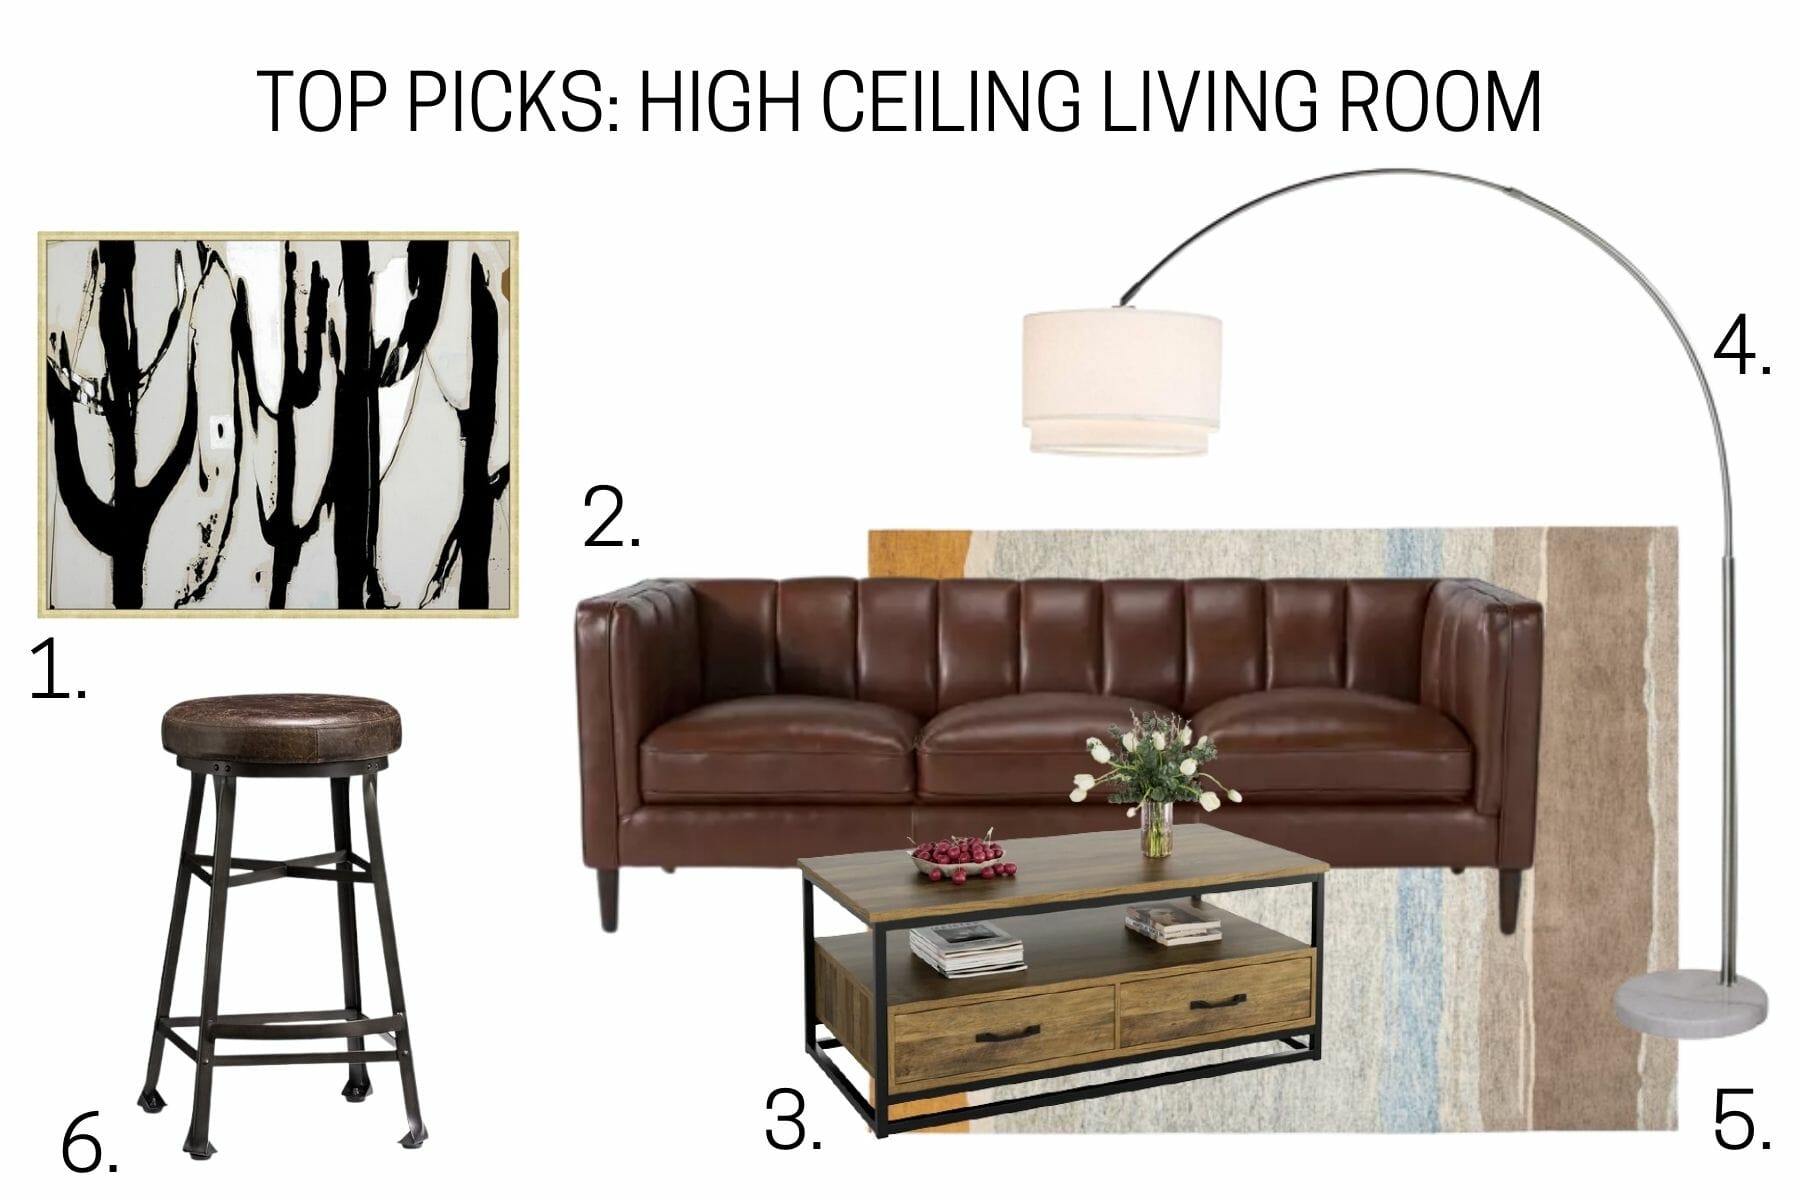 Contemporary high ceiling living room - Shopping list